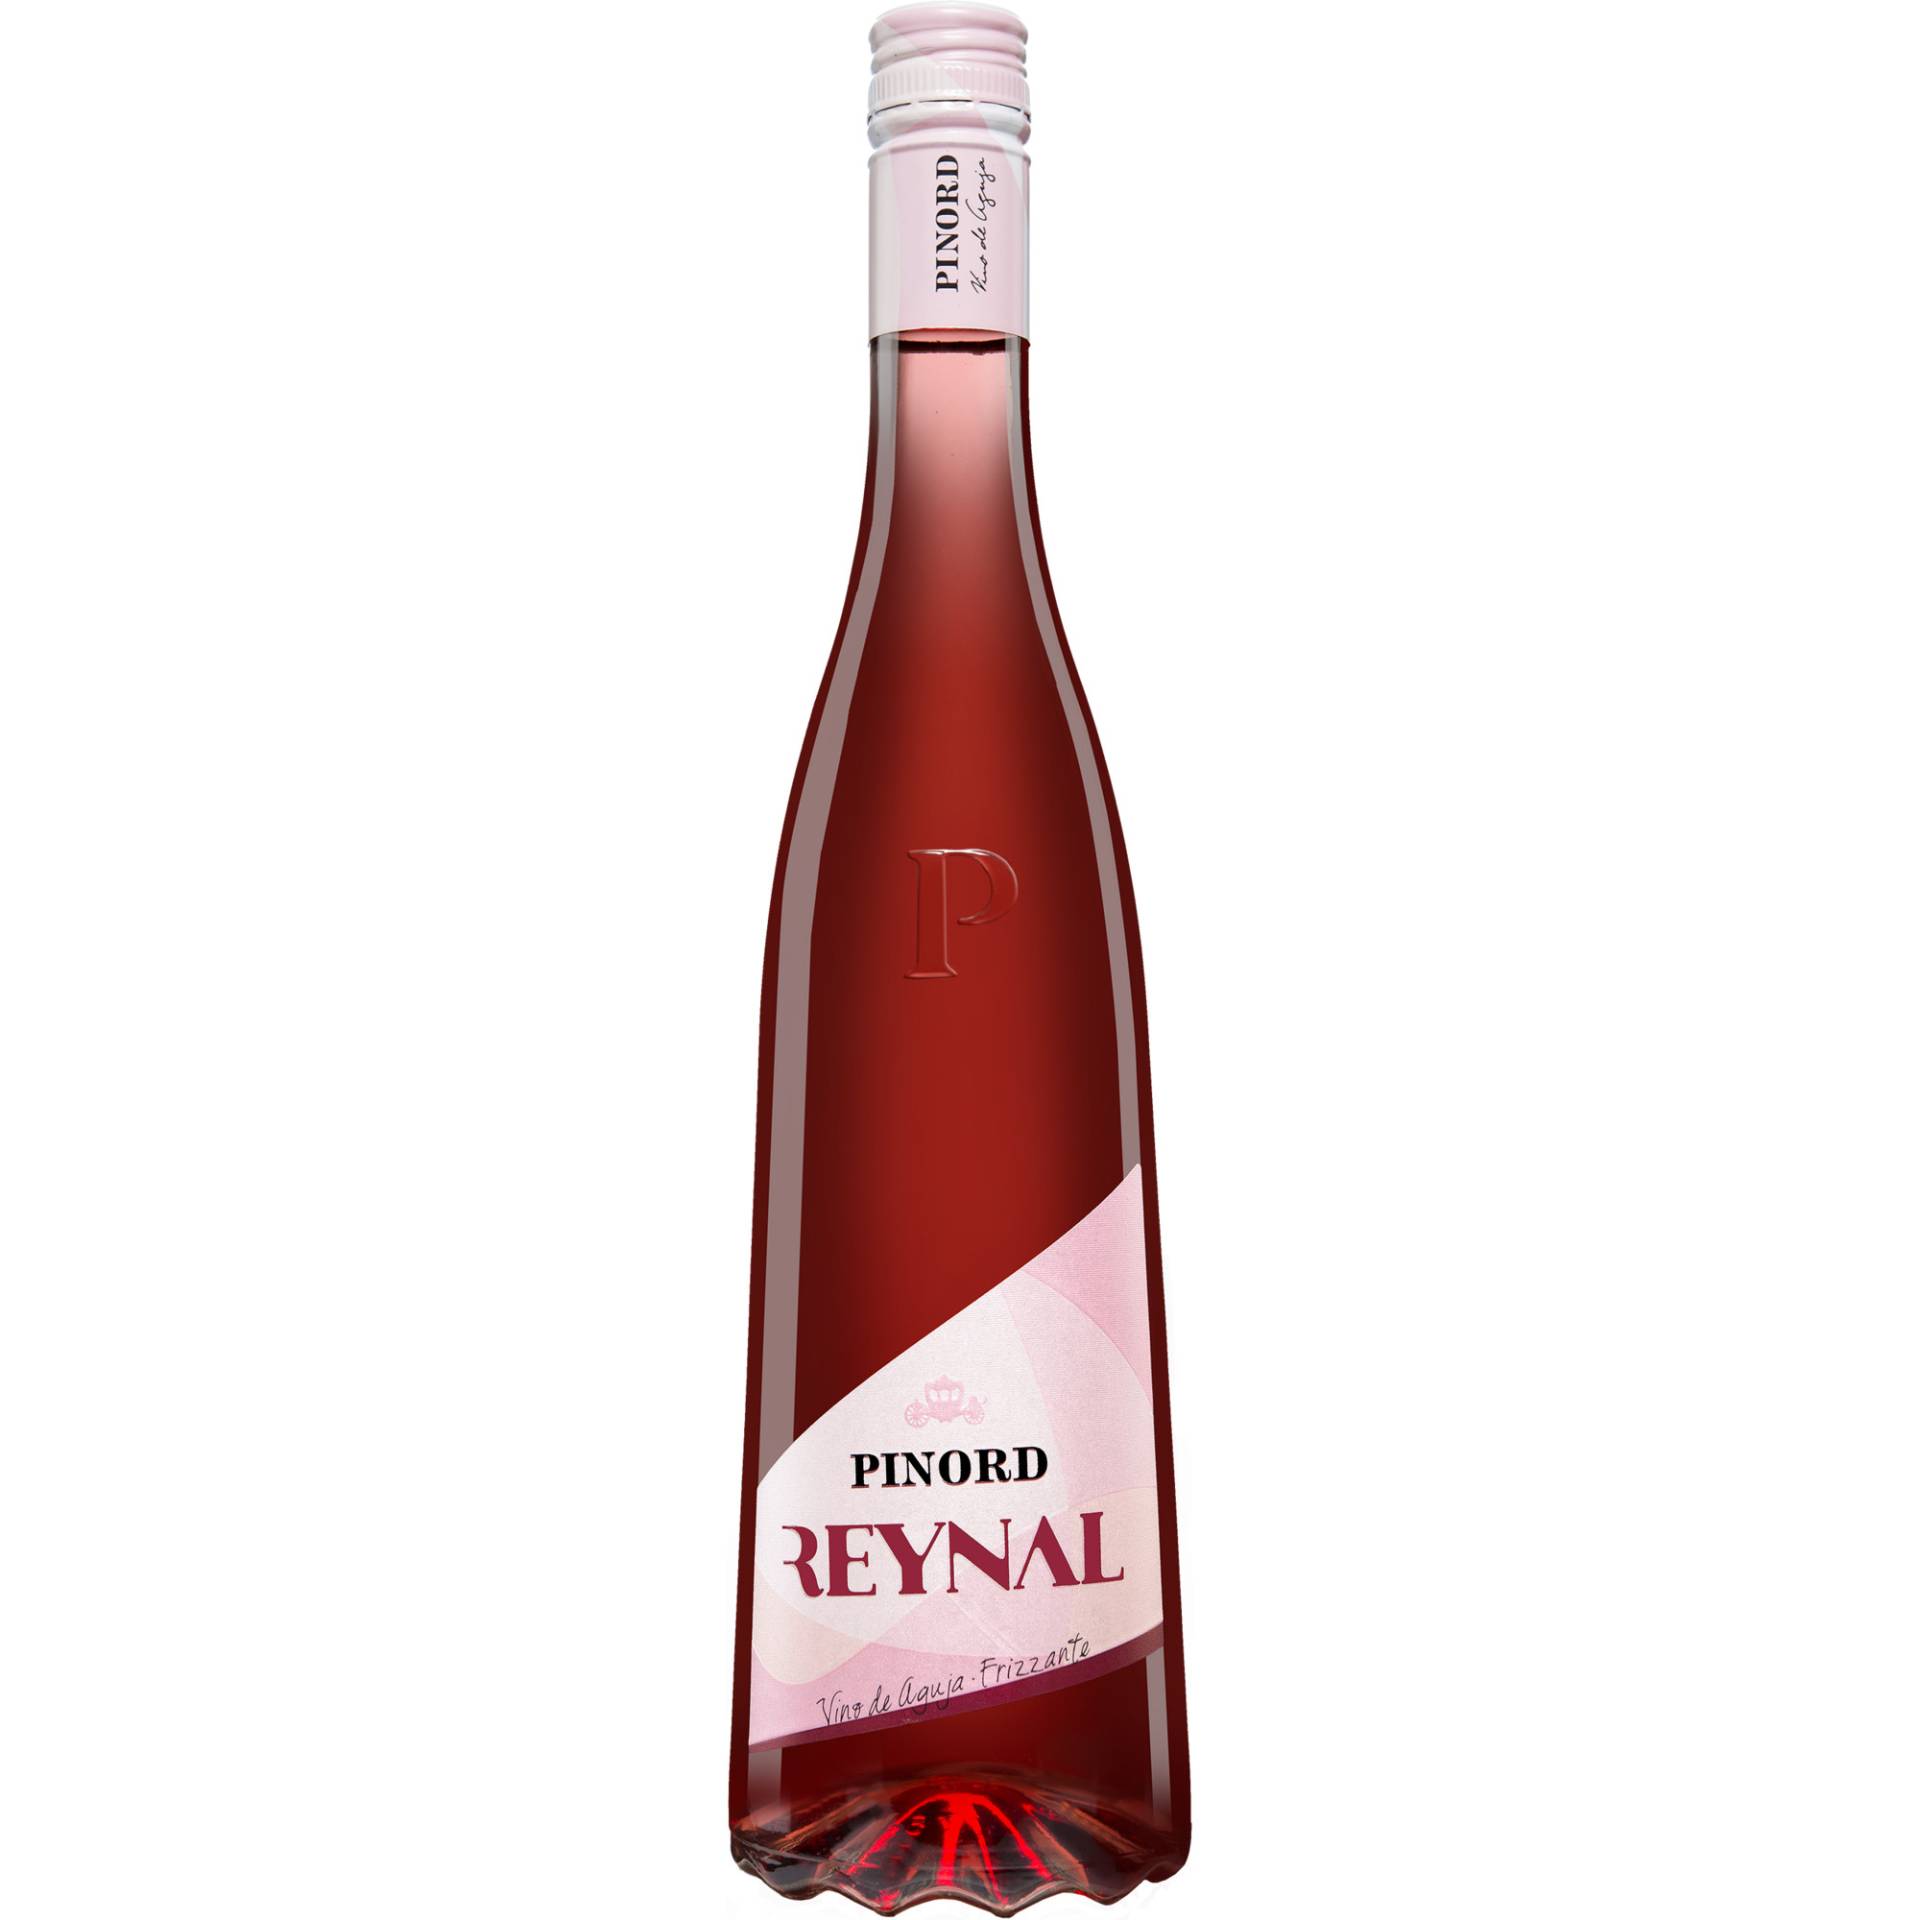 Pinord »Reynal« Rosé Frizzante  0.75L 10.5% Vol. Trocken aus Spanien von Pinord